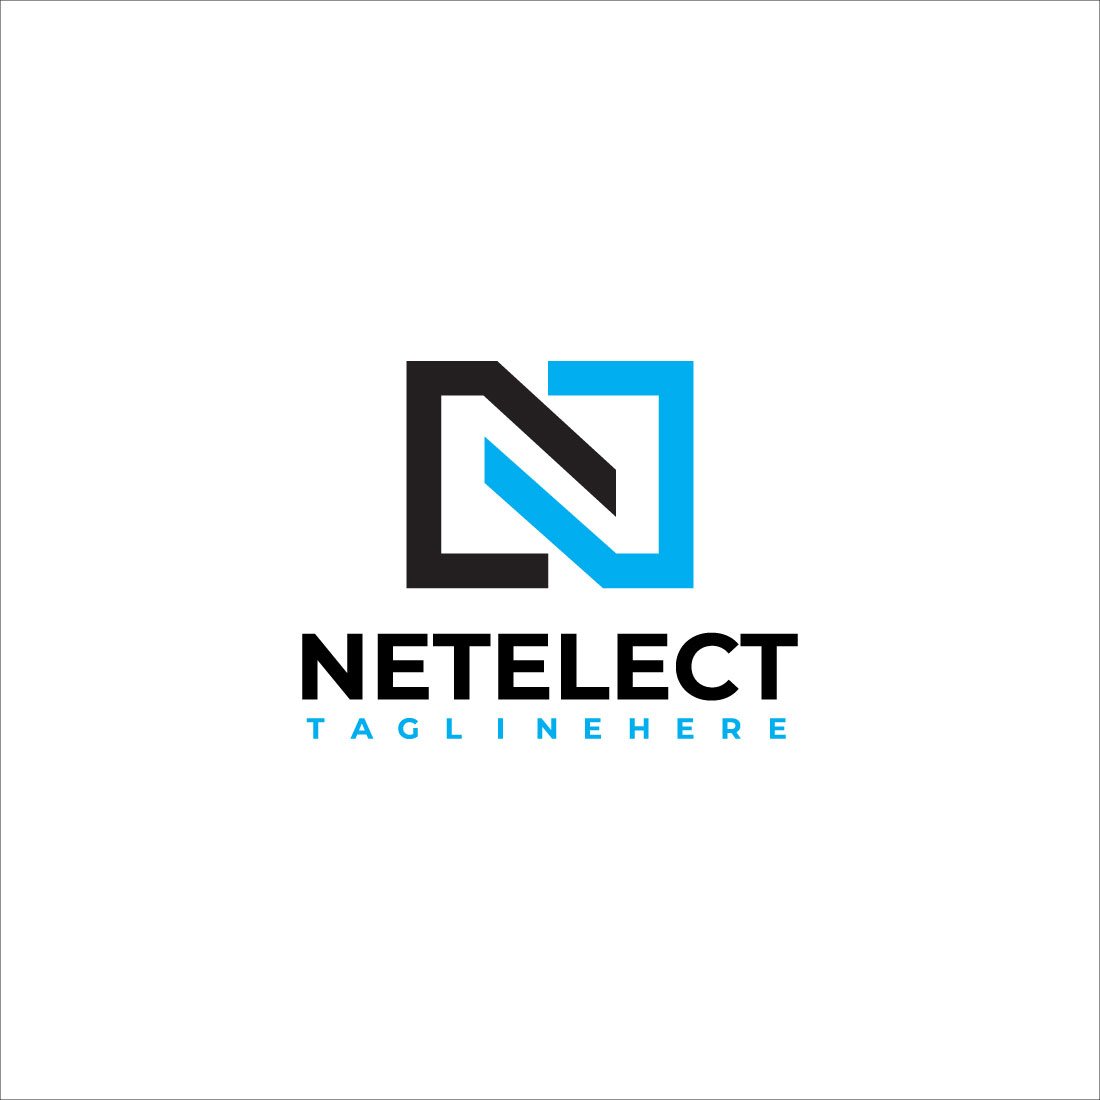 Netelect N letter Logo Design Template cover image.